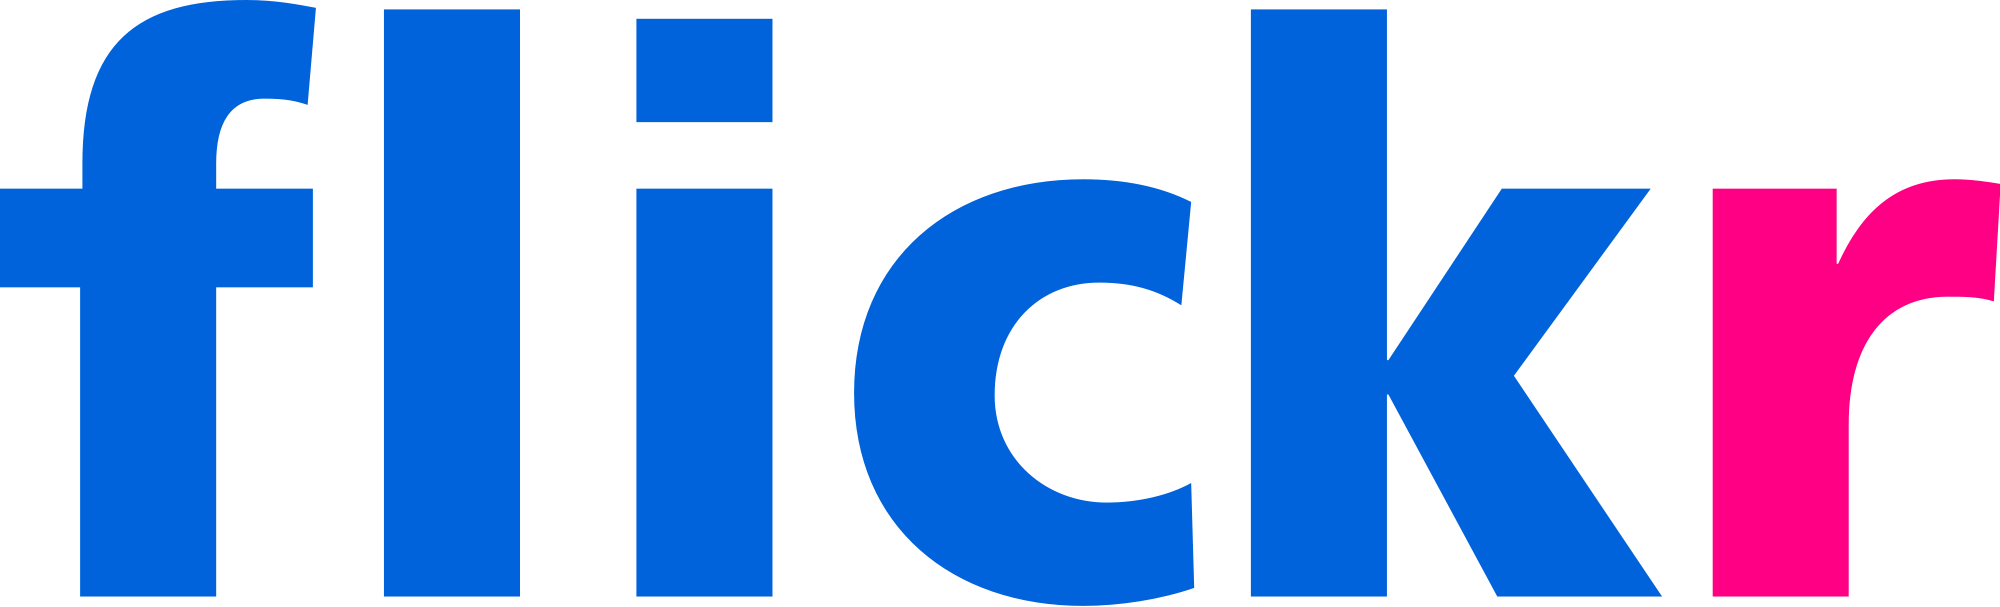 Flickr Logo - Flickr logo.png